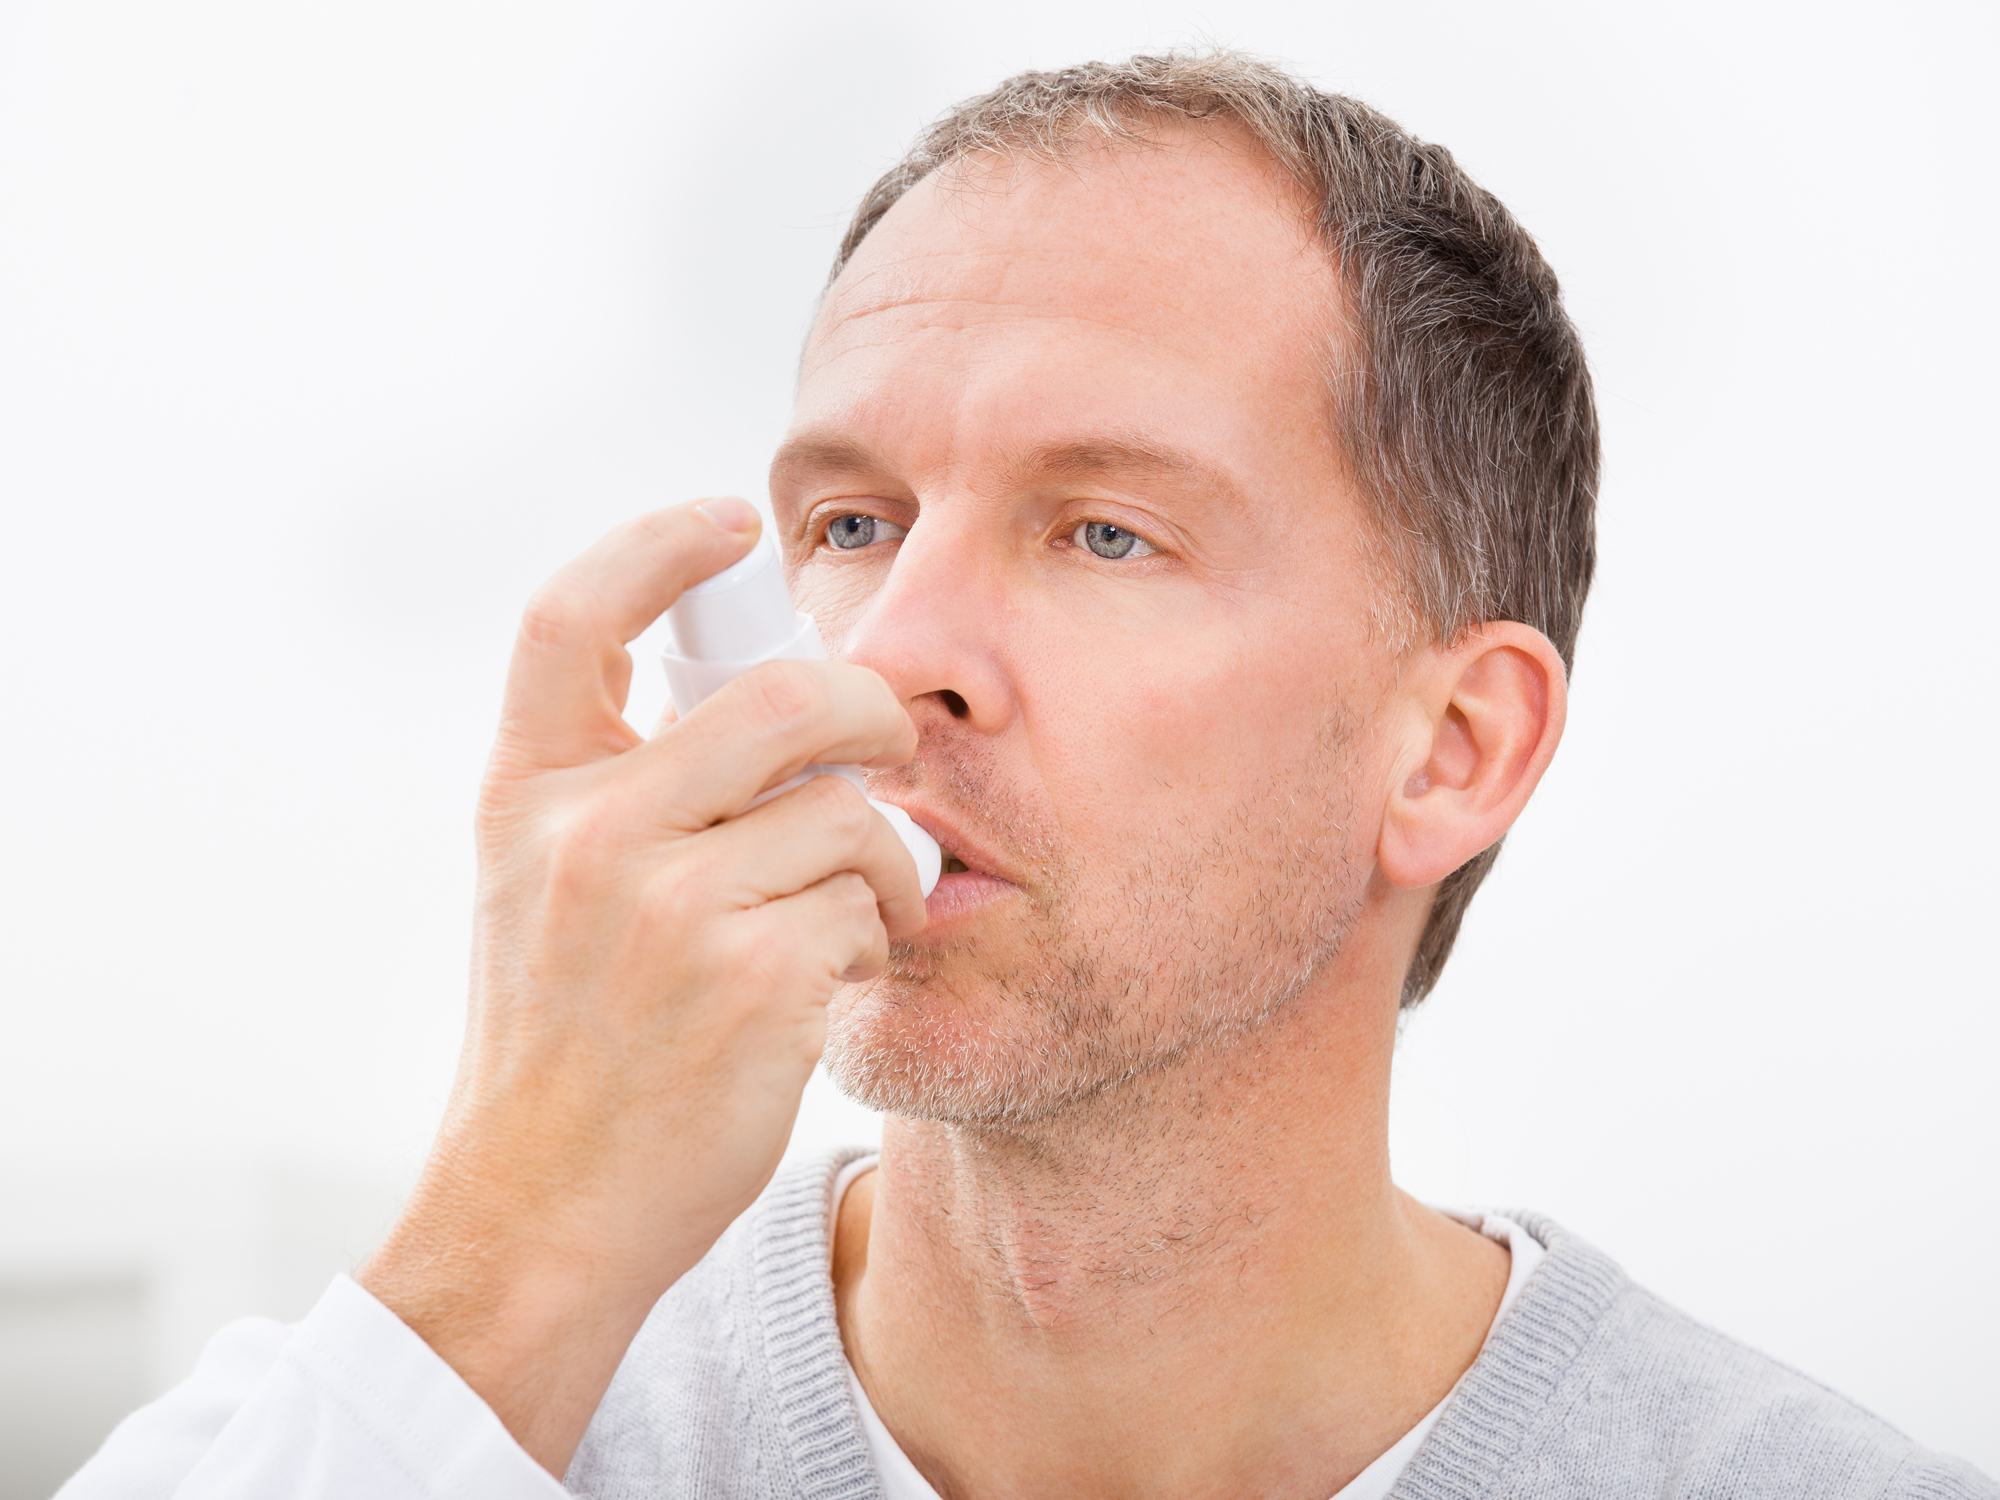 Weird but effective habit relieves asthma symptoms